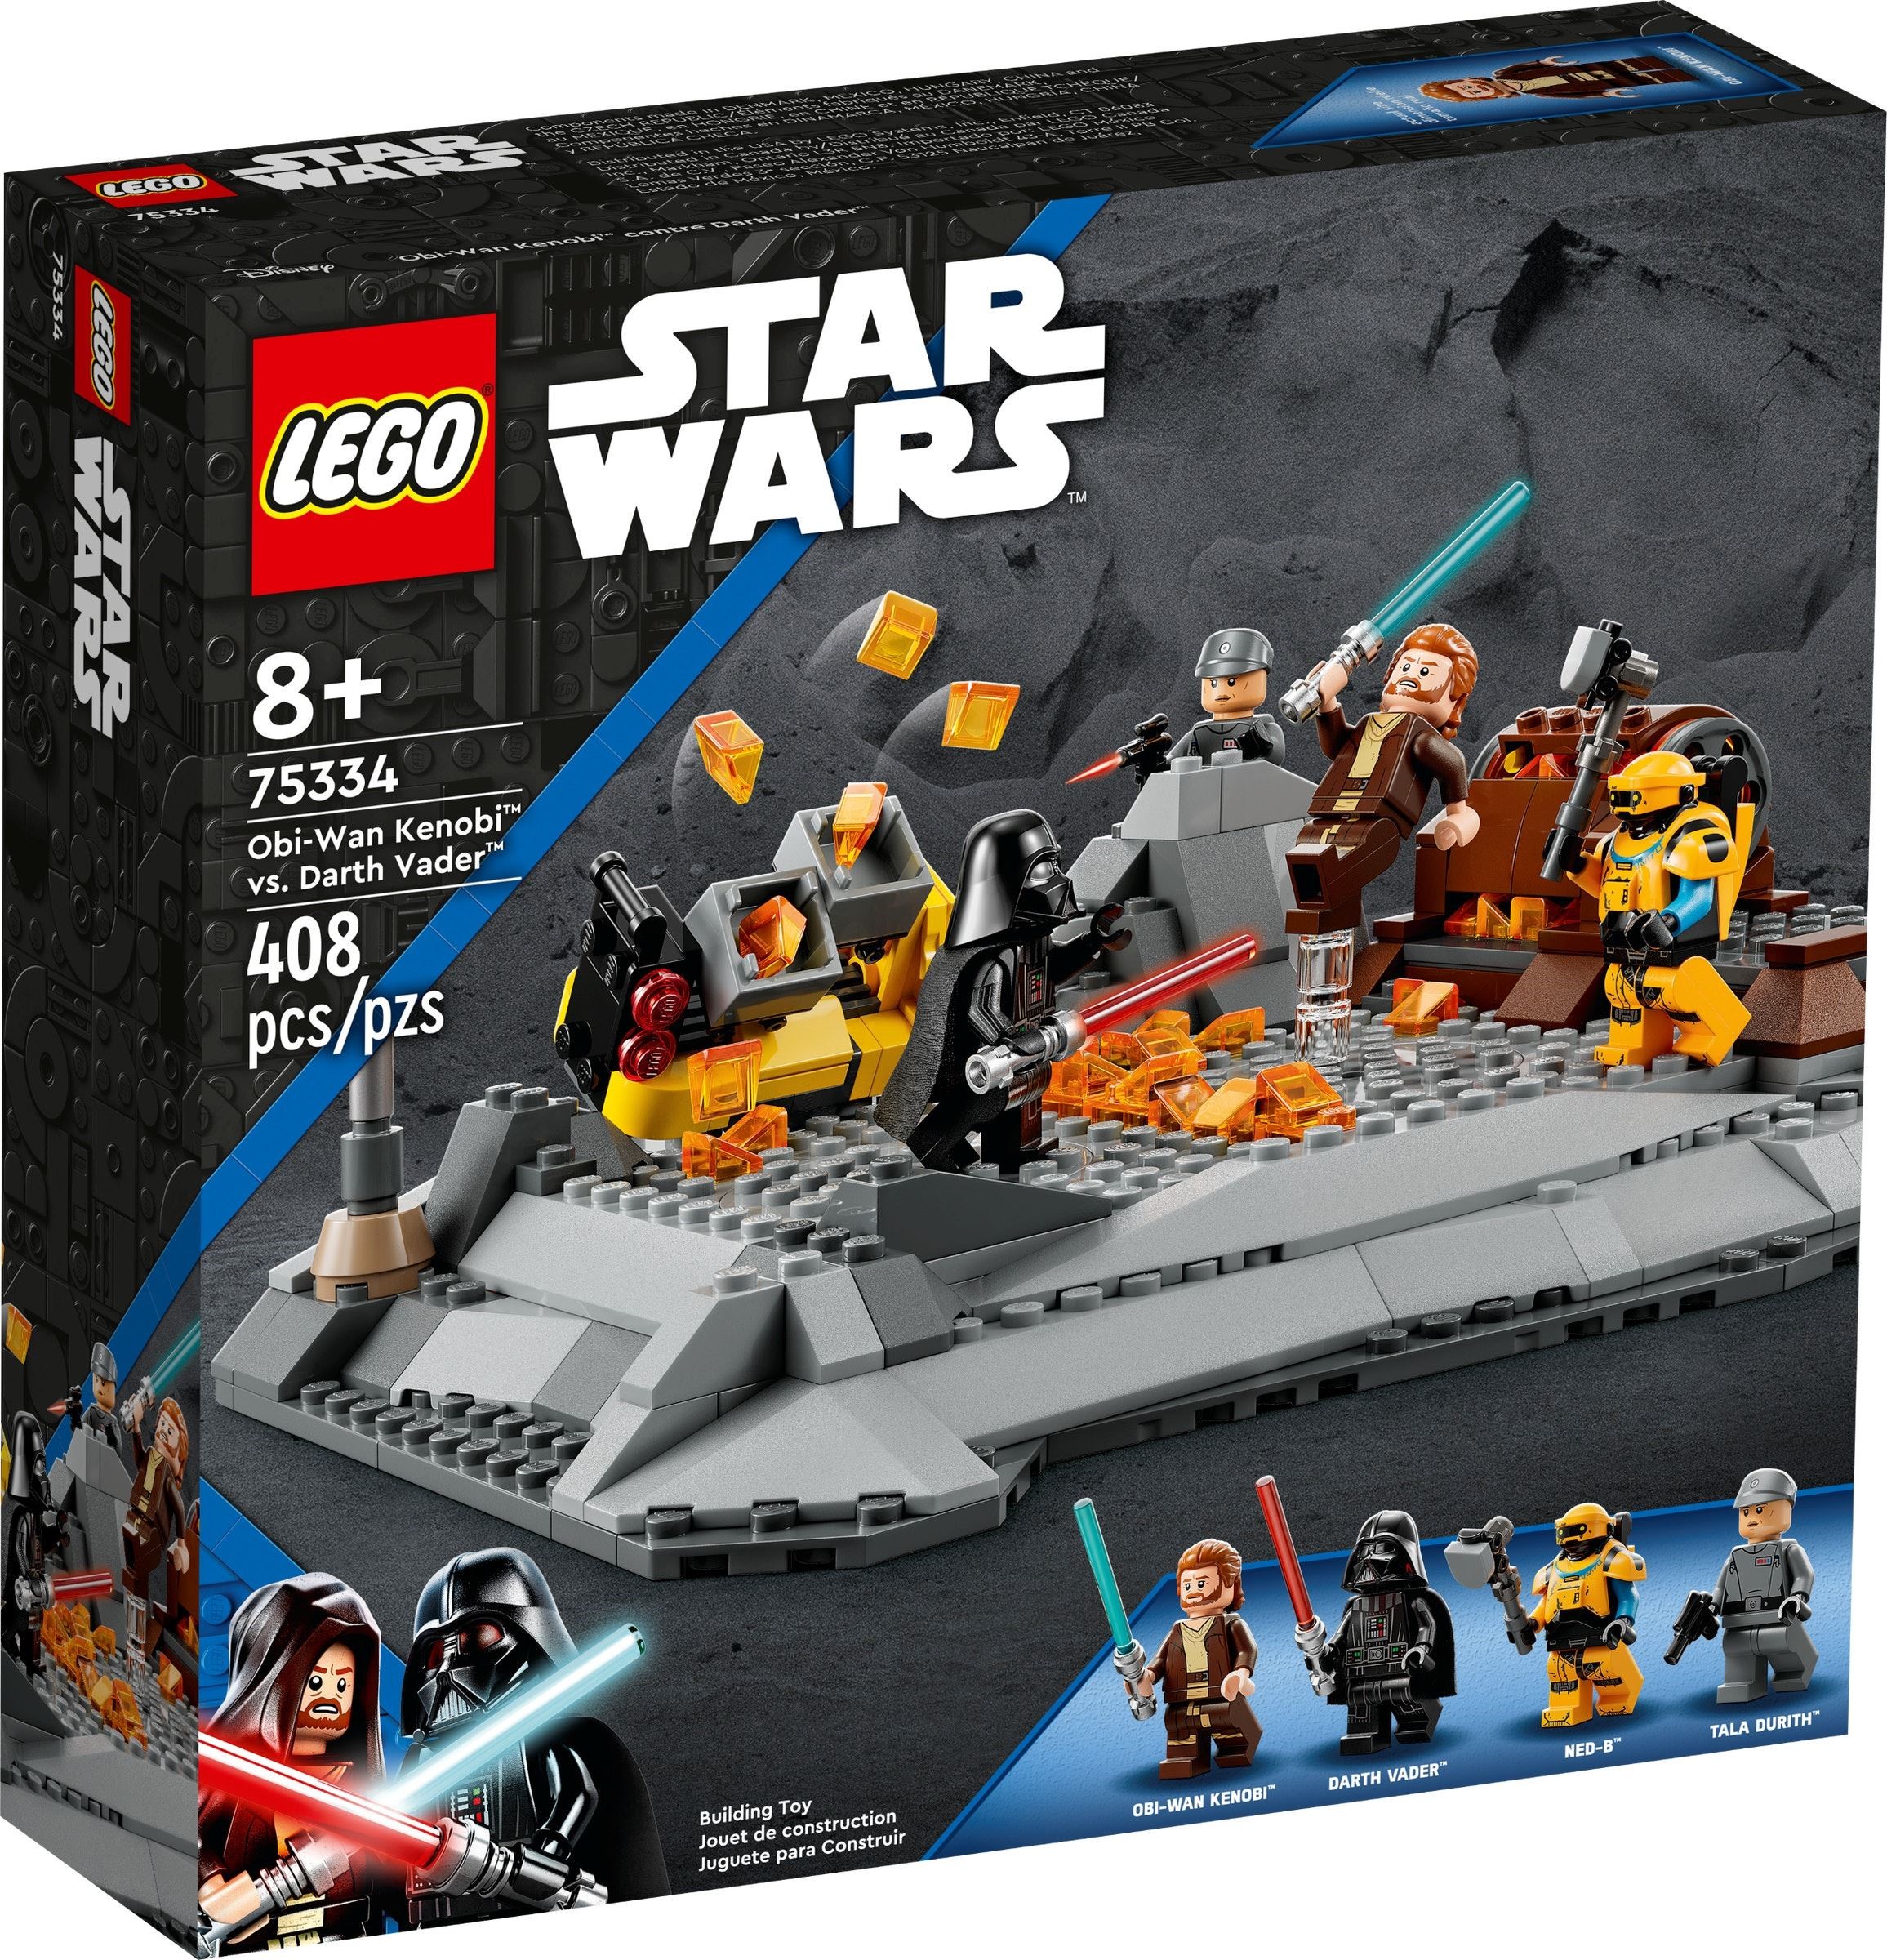 https://www.templeofbricks.com/img/sets/full/lego-star-wars/set-lego-star-wars-75334-1.jpg